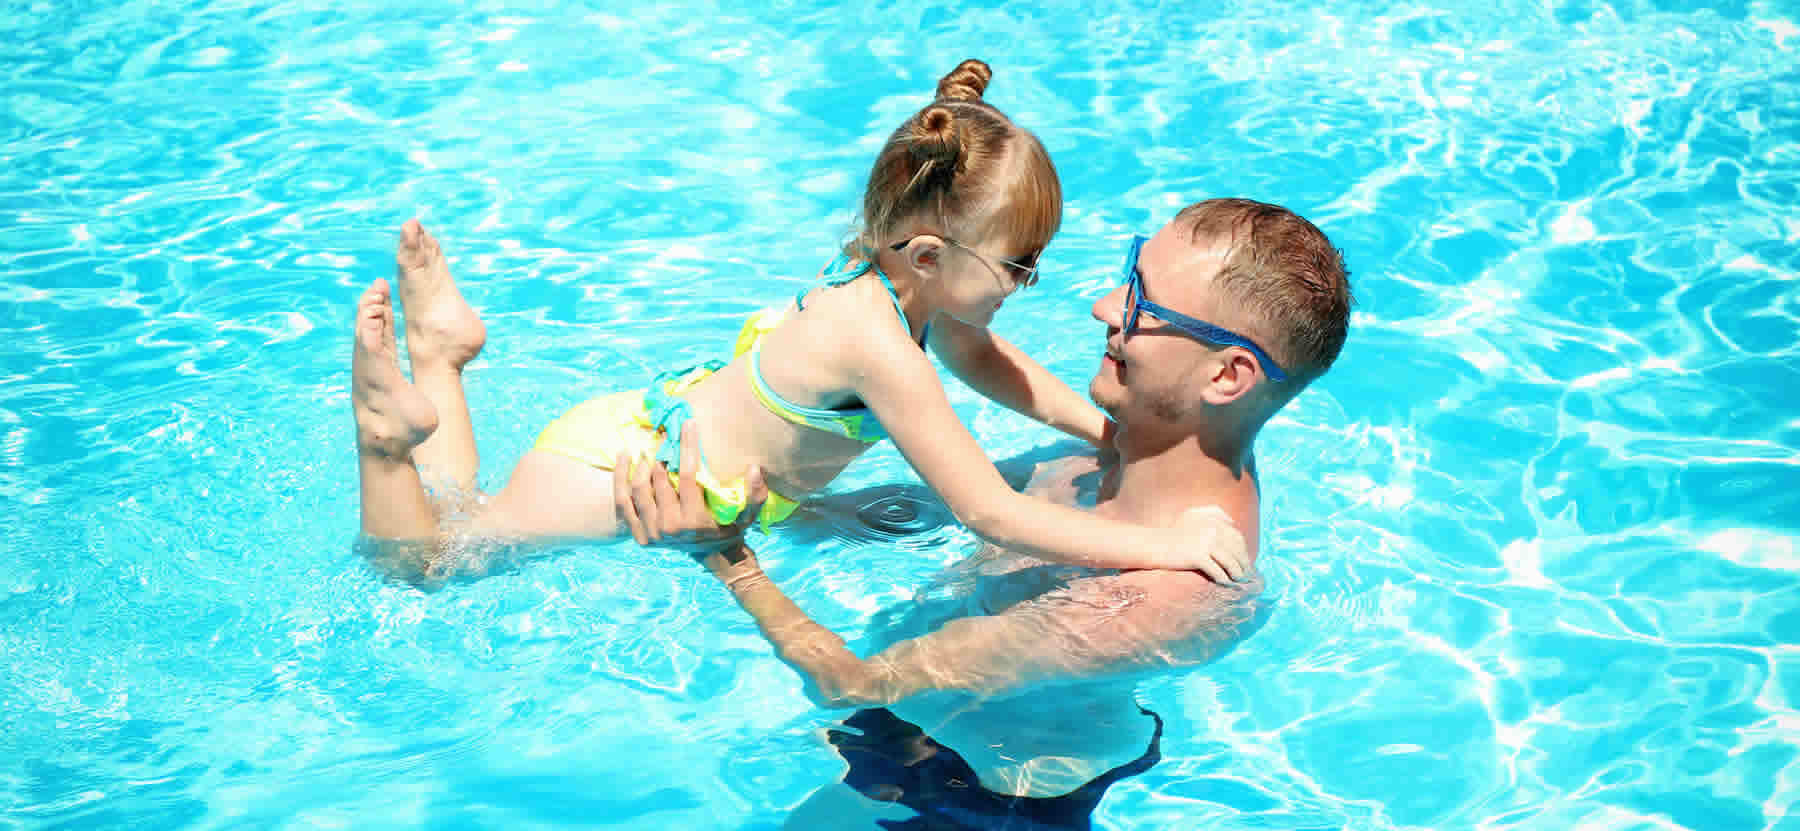 Get your spa and pool refurbished by Quality Pool & Spa of Moorhead, Minnesota.